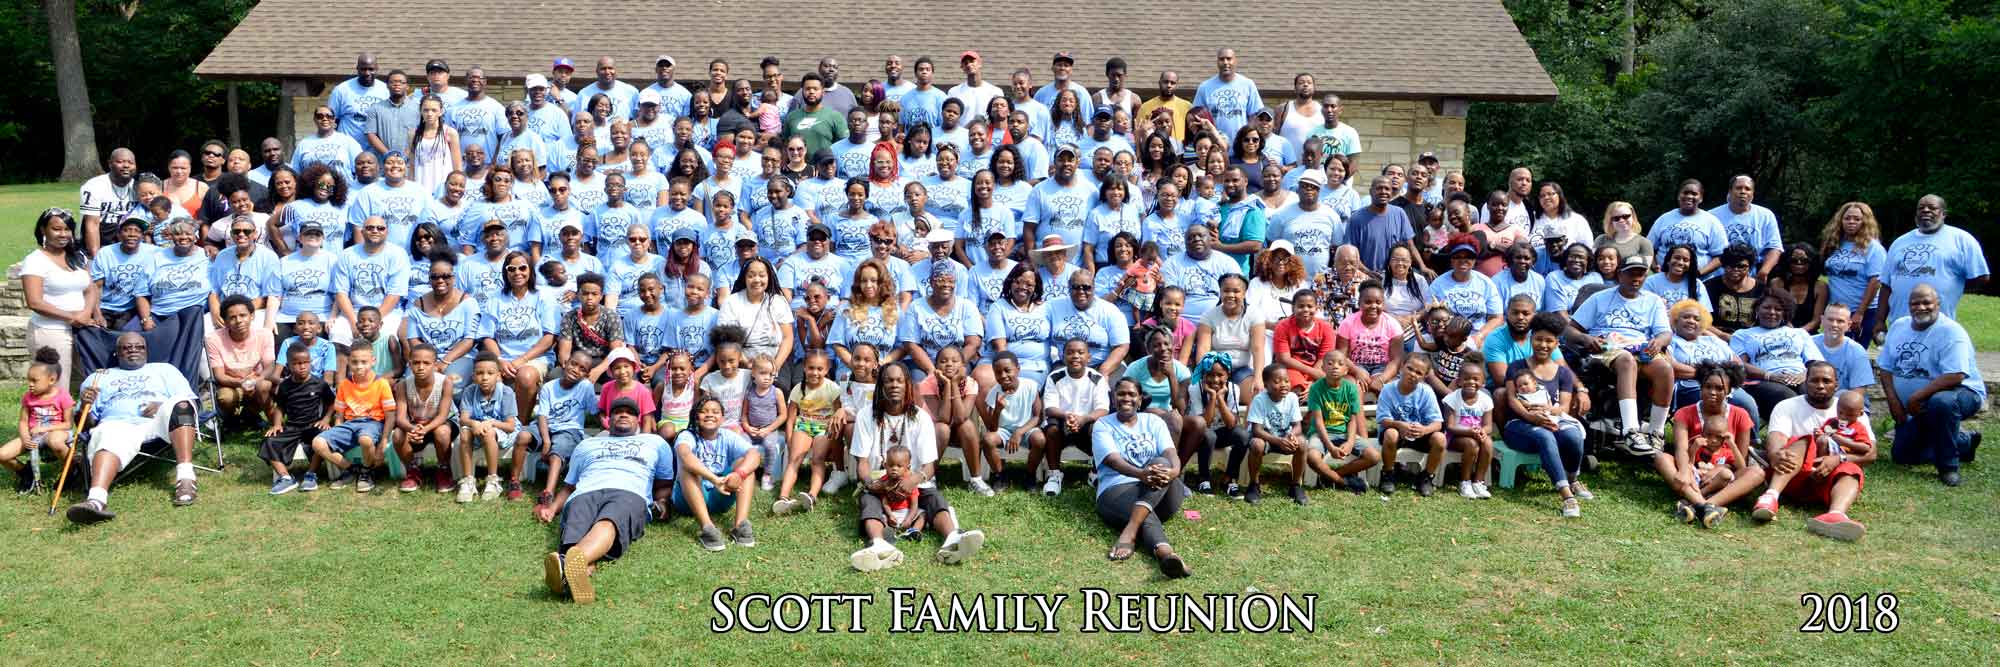 Scott Family Reunion Group Photo by Tom Killoran